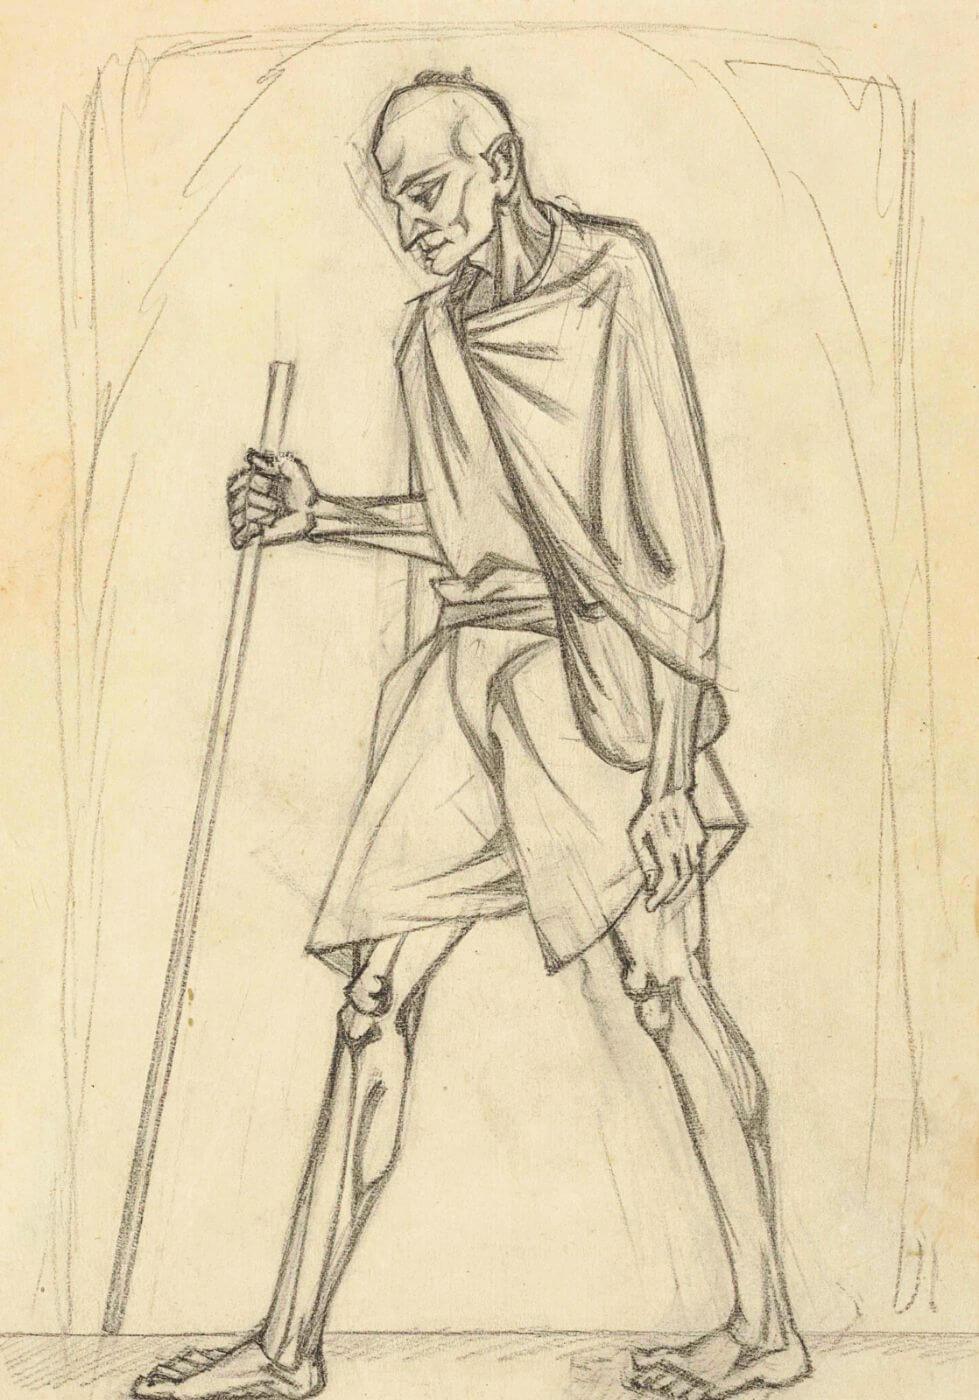 Hand Draw Mahatma Gandhi Sketch For Gandhi Jayanti Background Royalty Free  SVG, Cliparts, Vectors, and Stock Illustration. Image 191071710.